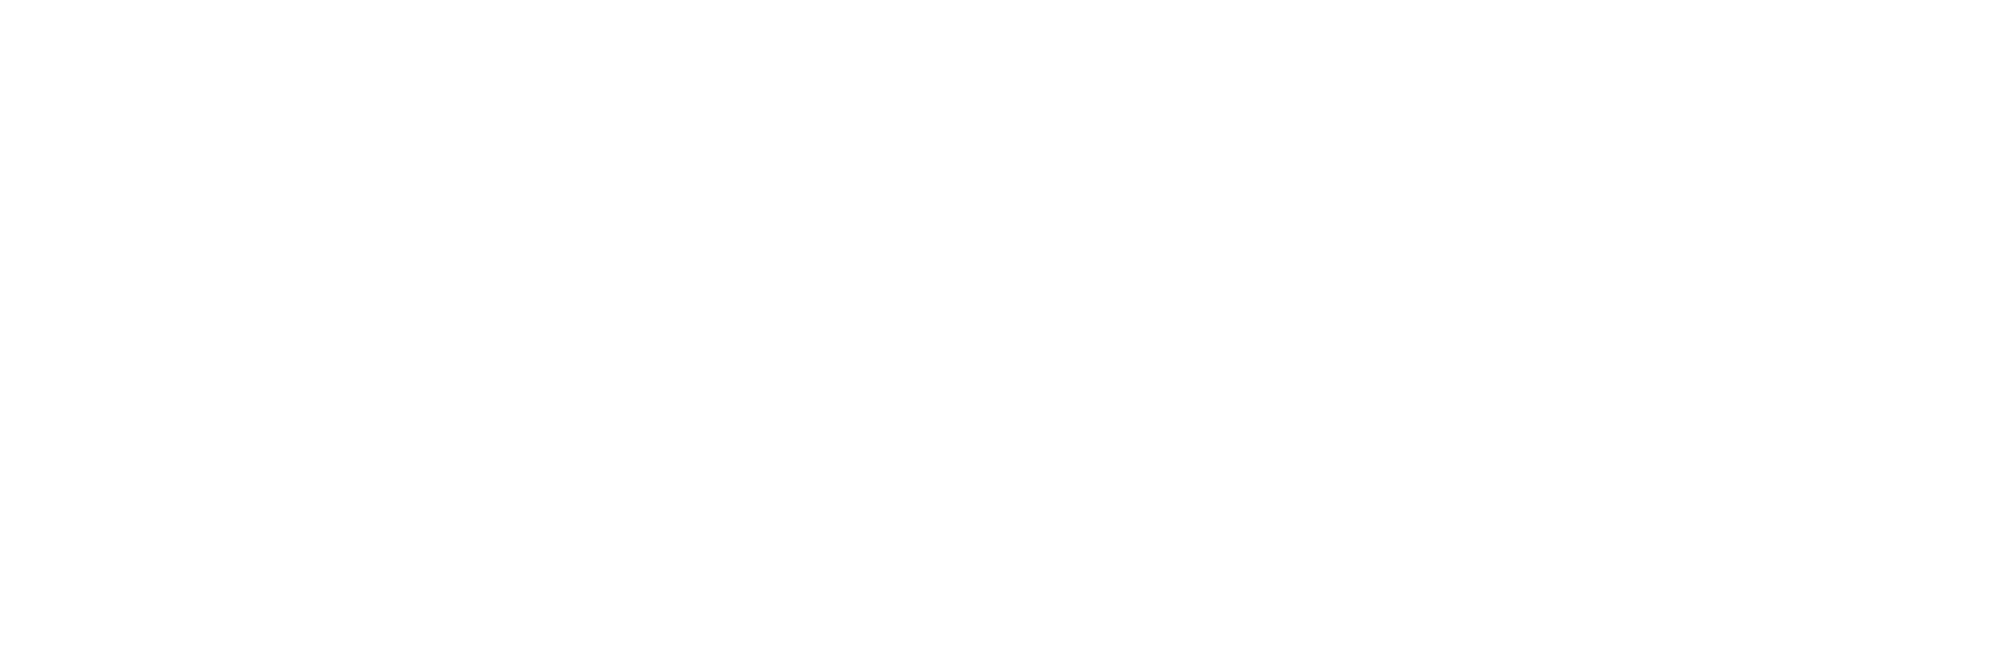 Tires Companies